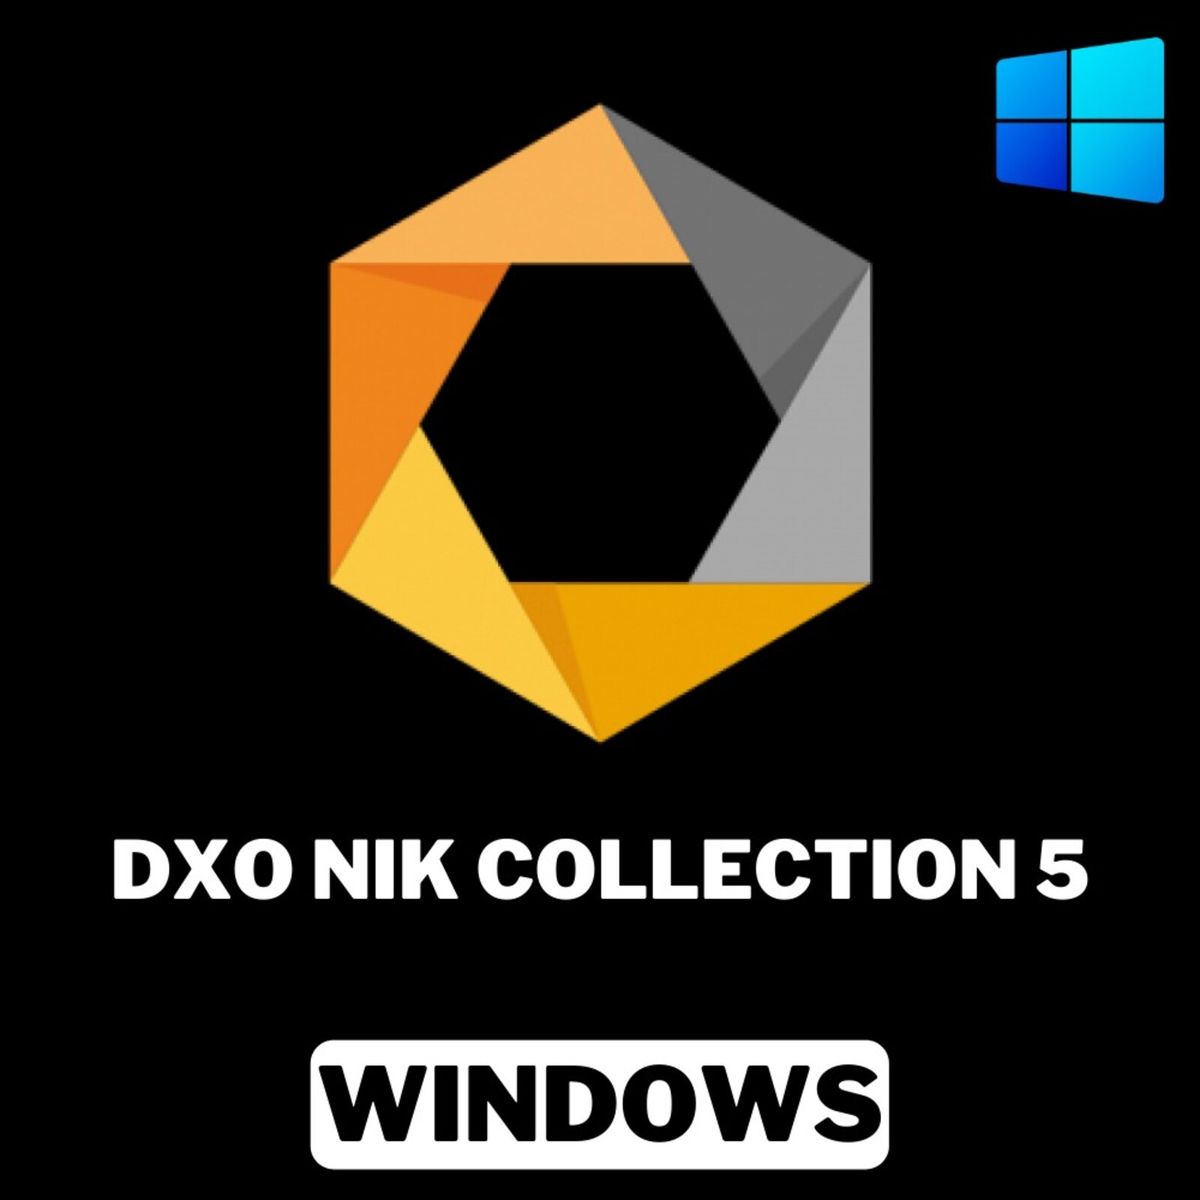 Complejo Guión Entender mal DXO NIK COLLECTION 5 - Windows/Mac (Lifetime) for sale in Dublin for €30 on  DoneDeal